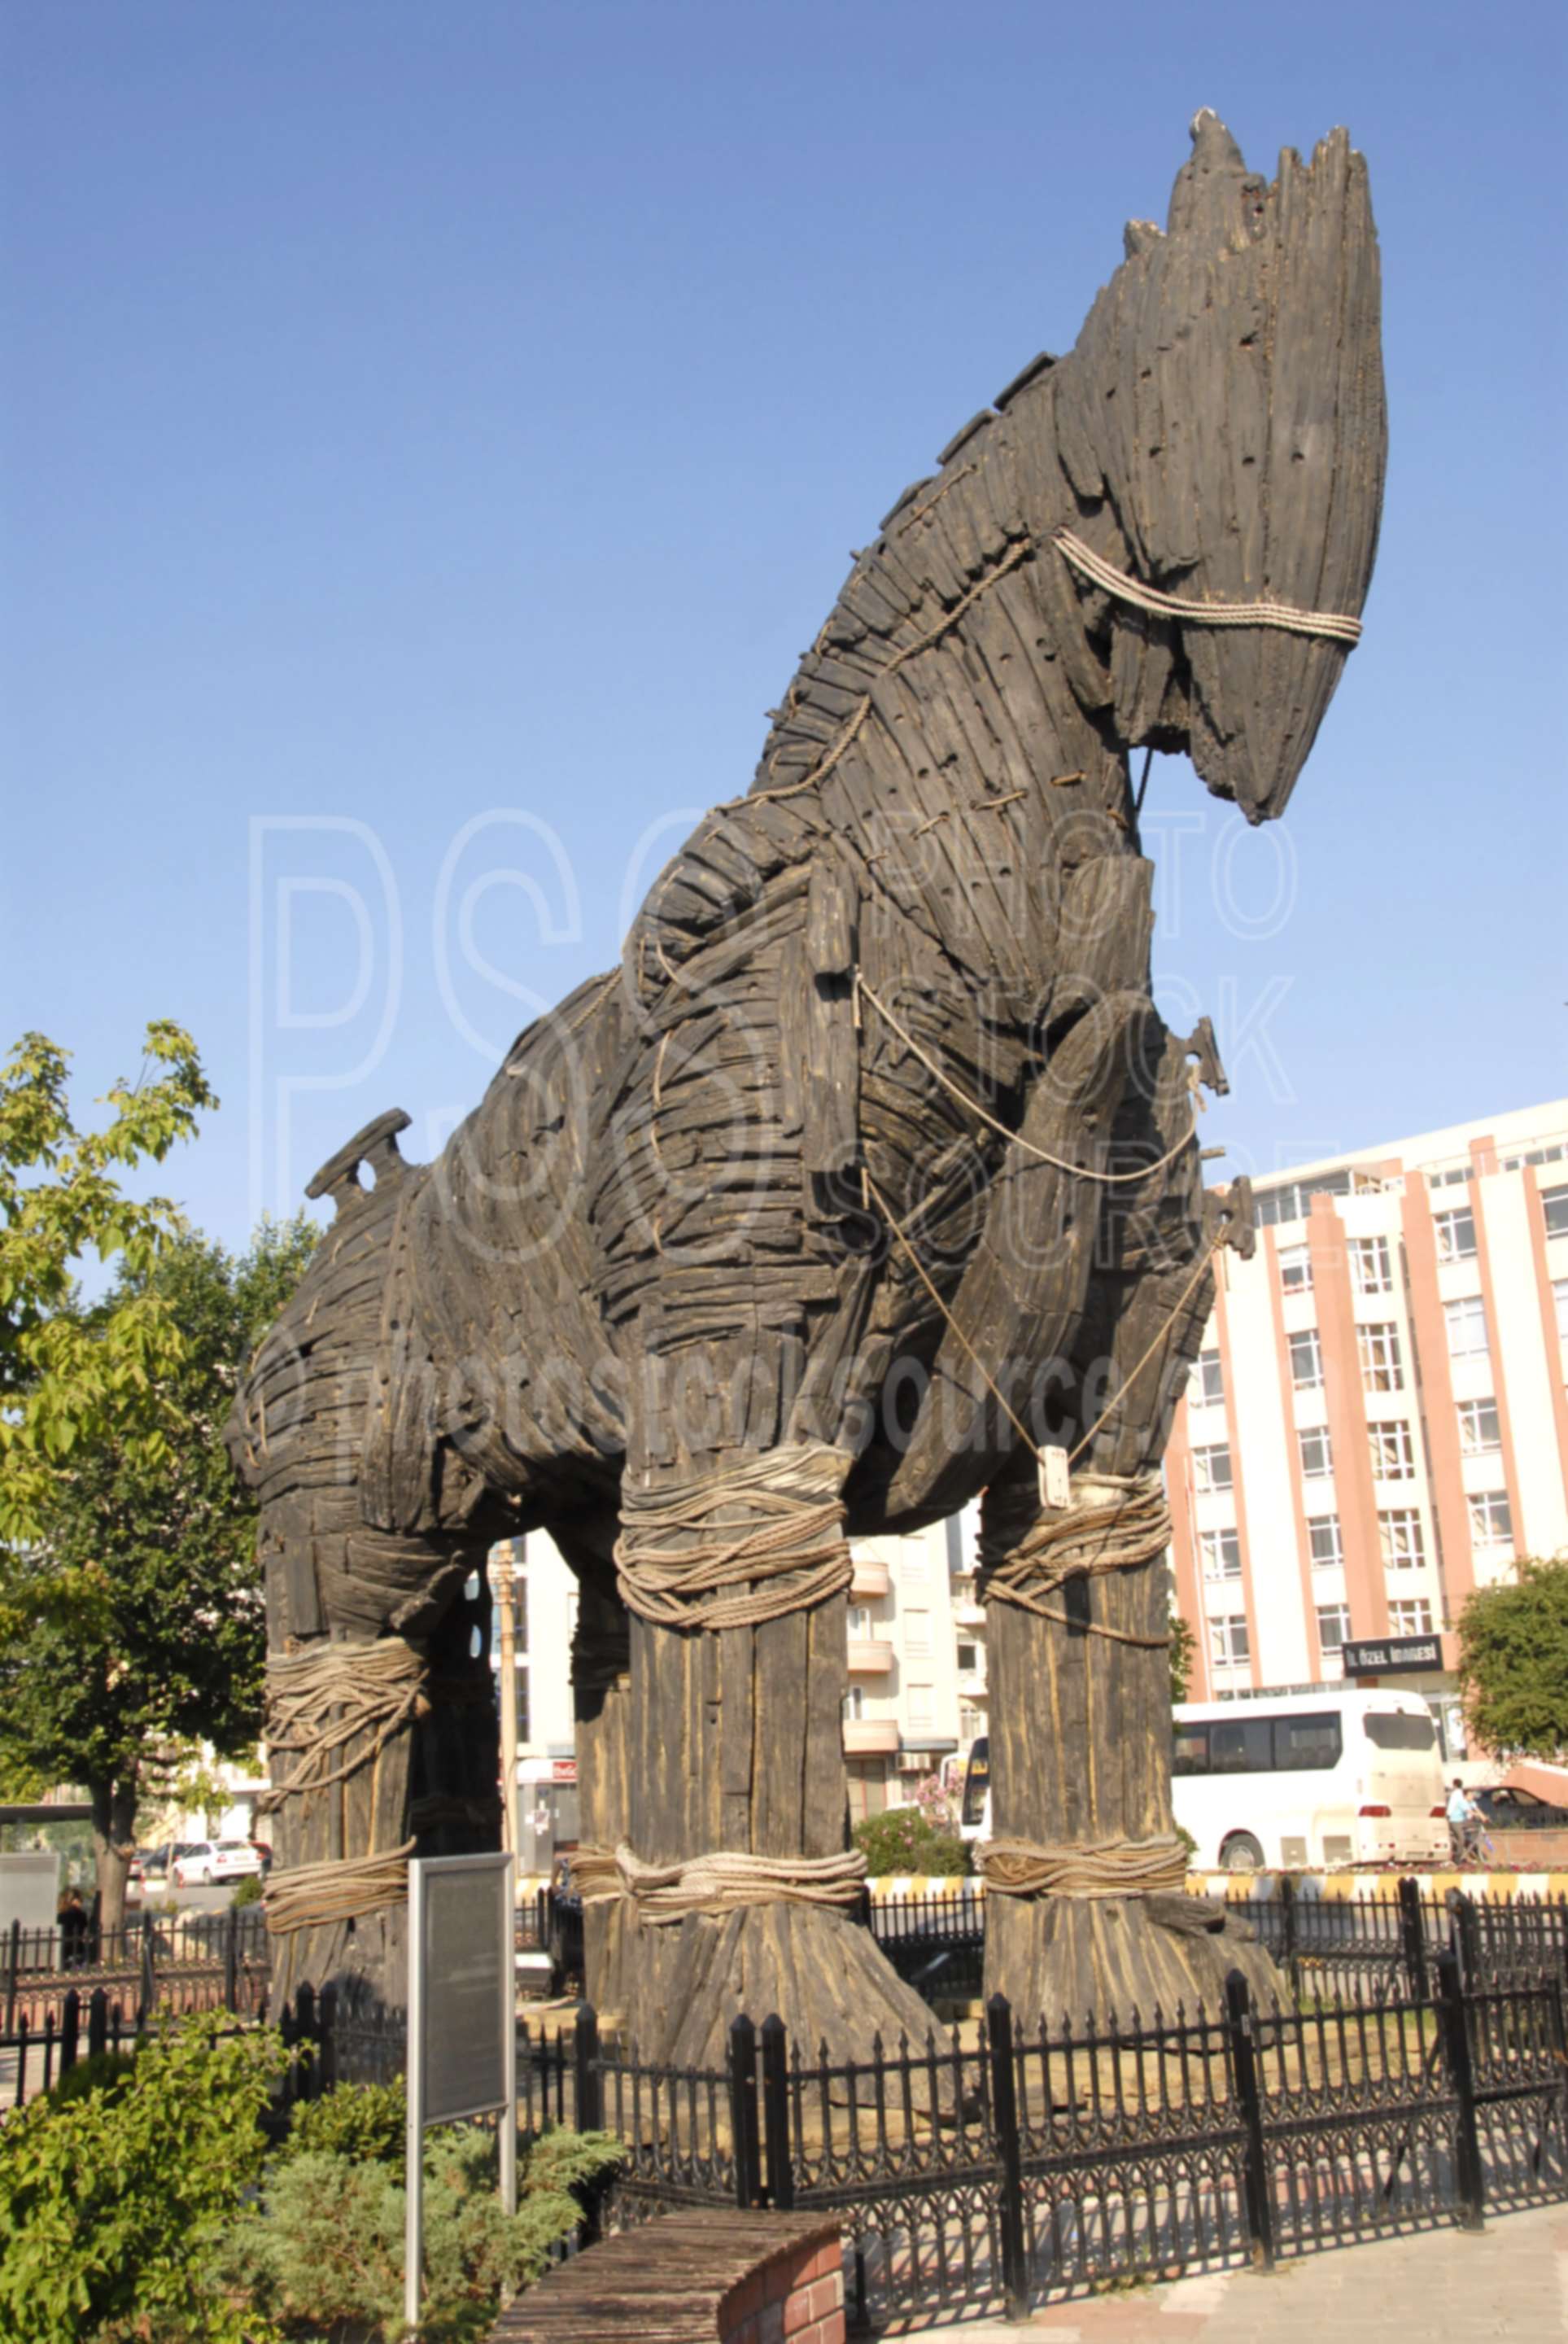 Trojan Horse,troy,brad pitt,movie,horse,sculpture